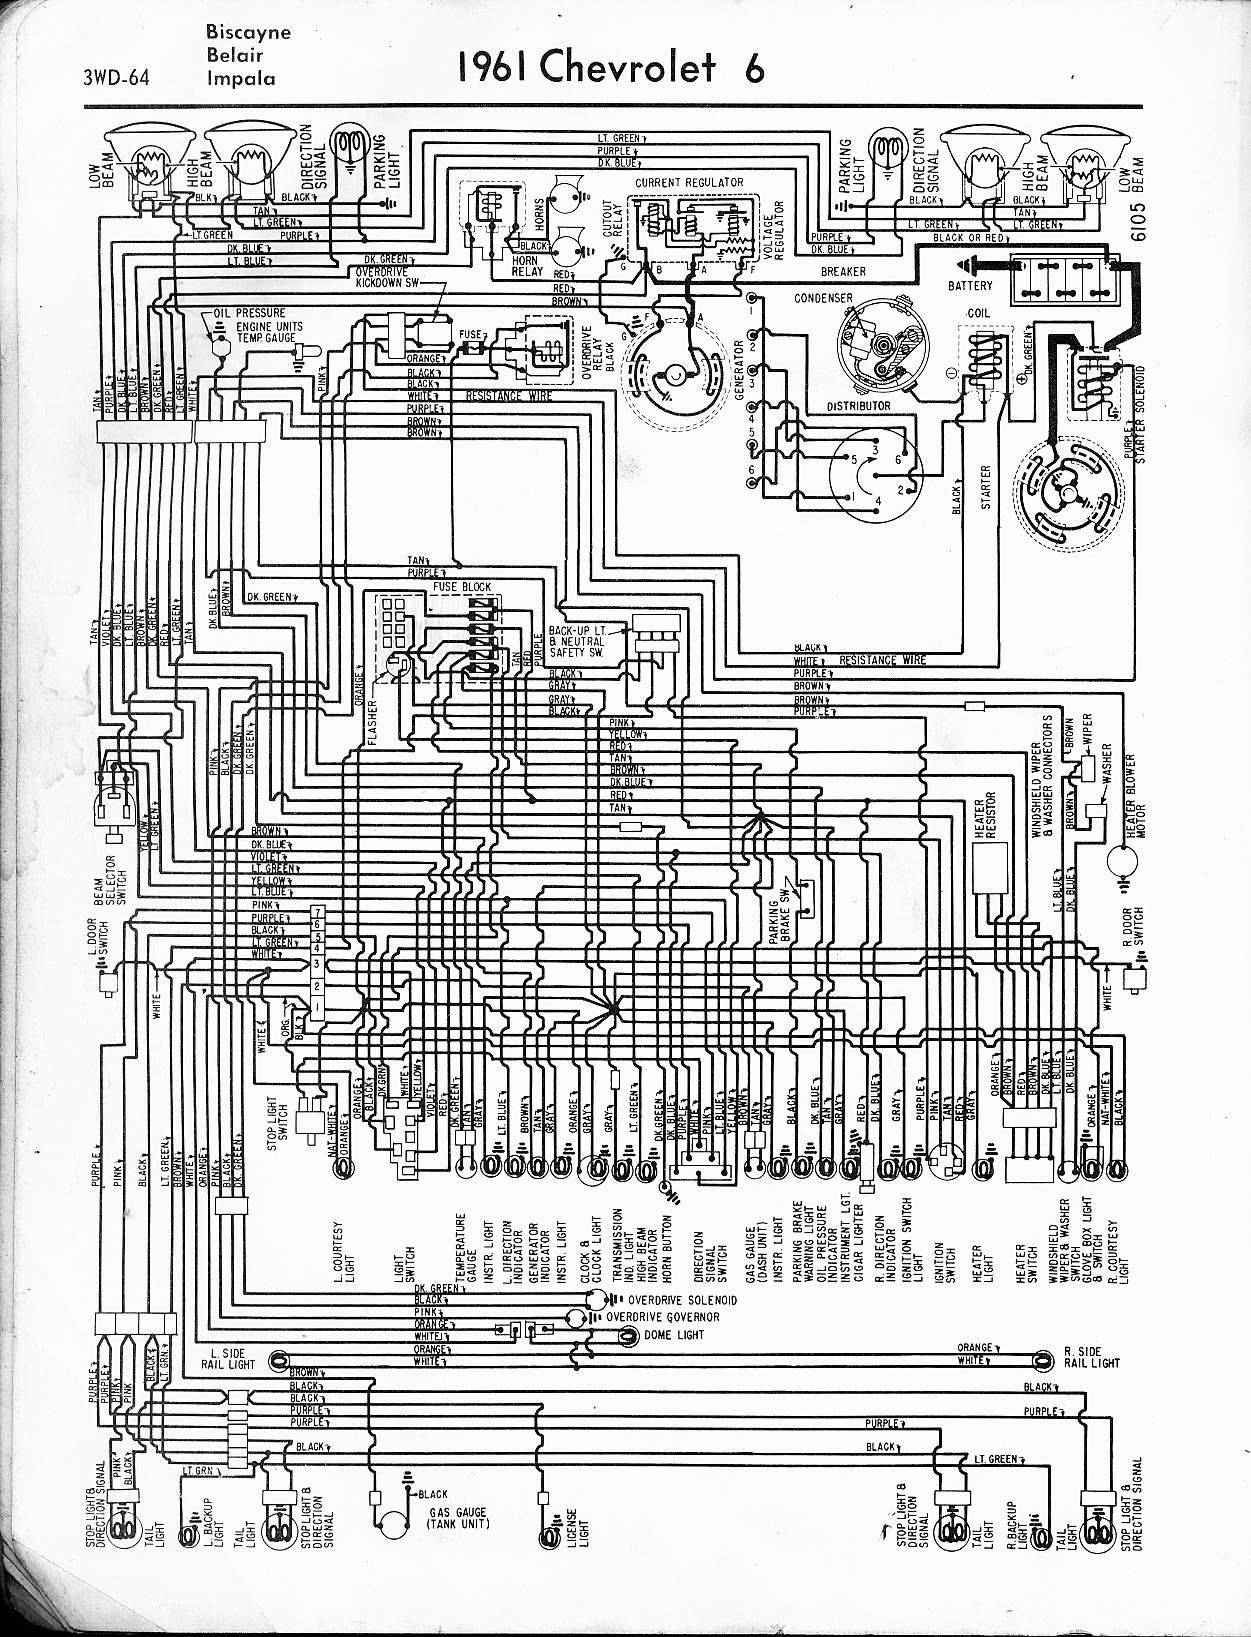 57 - 65 Chevy Wiring Diagrams 1964 impala tail light wiring diagram 